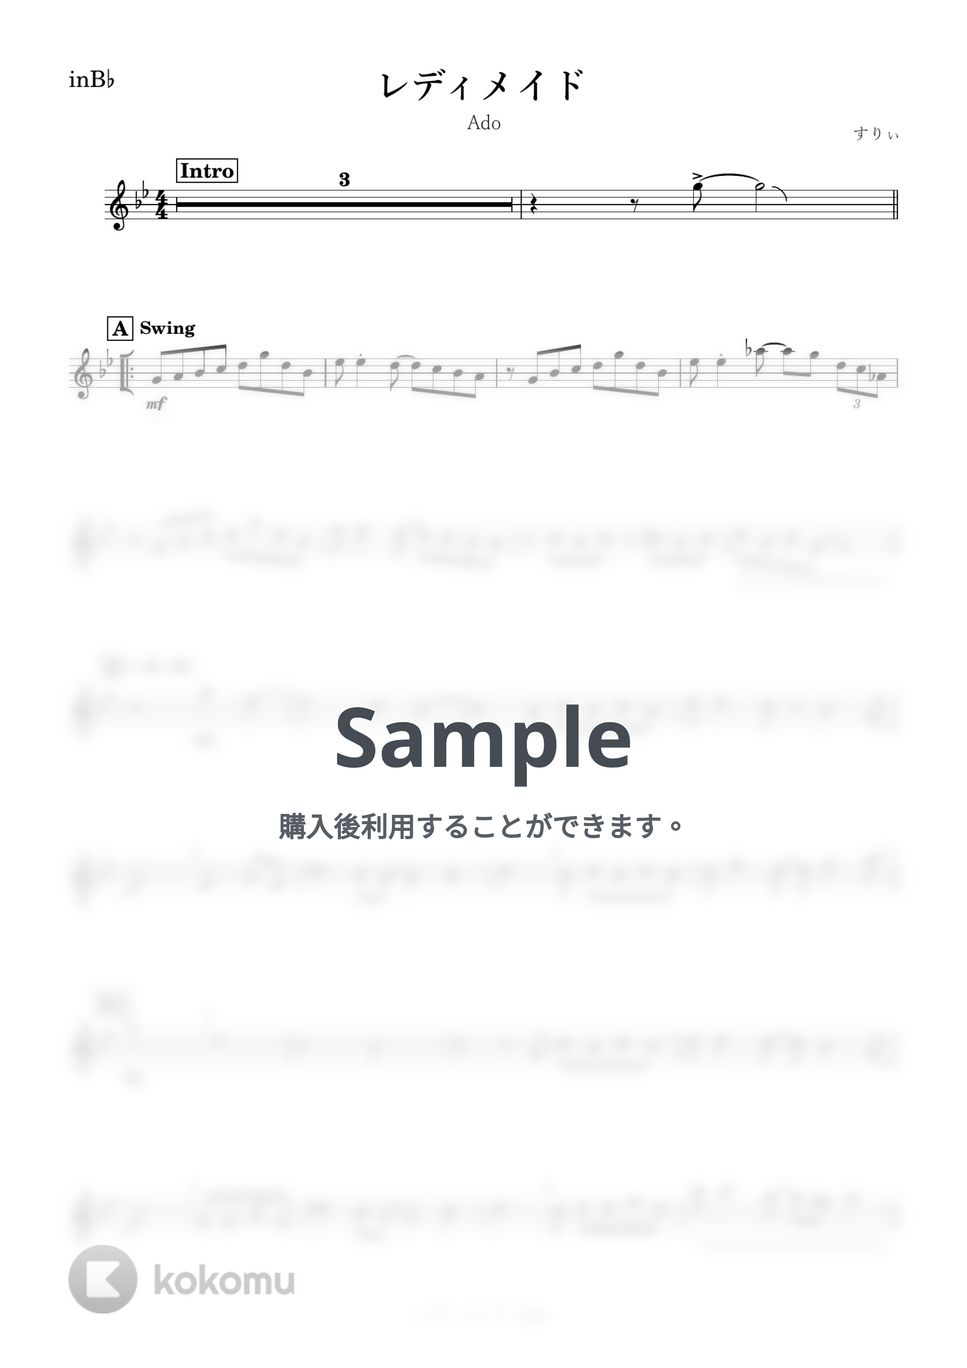 Ado - レディメイド (B♭) by kanamusic